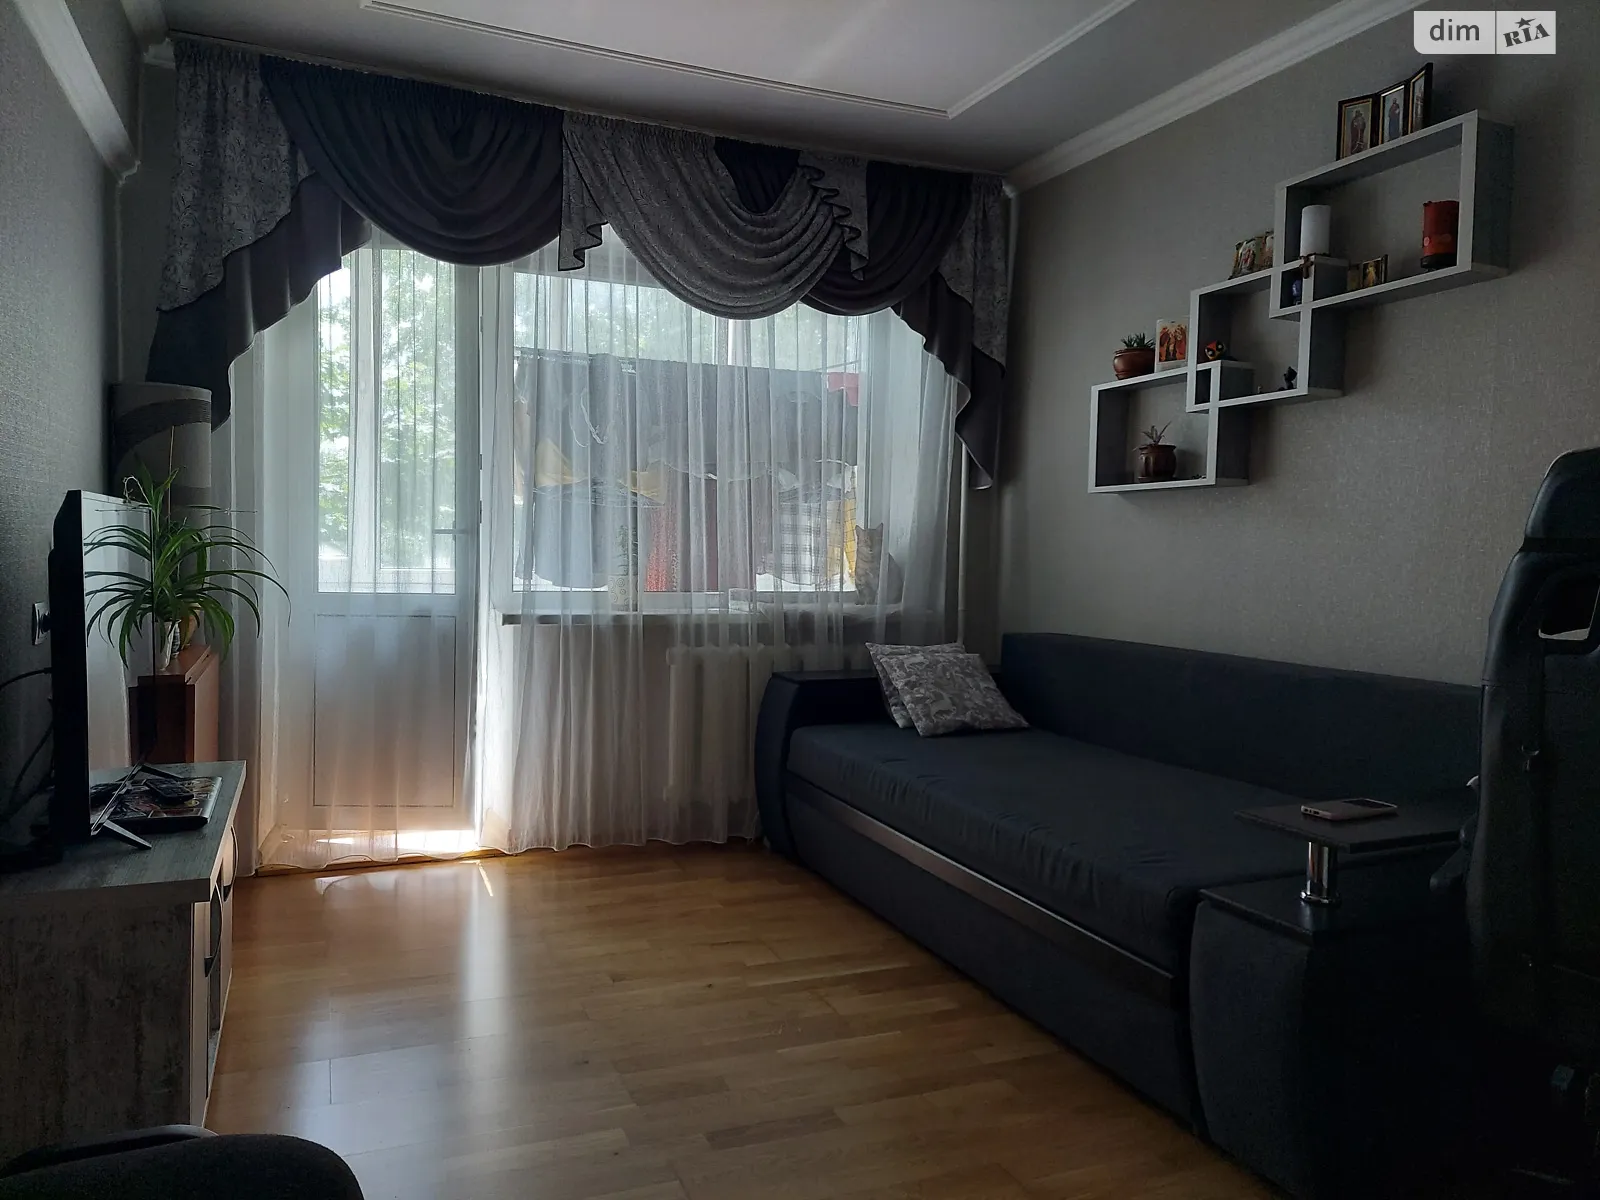 2-комнатная квартира 48.8 кв. м в Тернополе, ул. Бережанская - фото 1